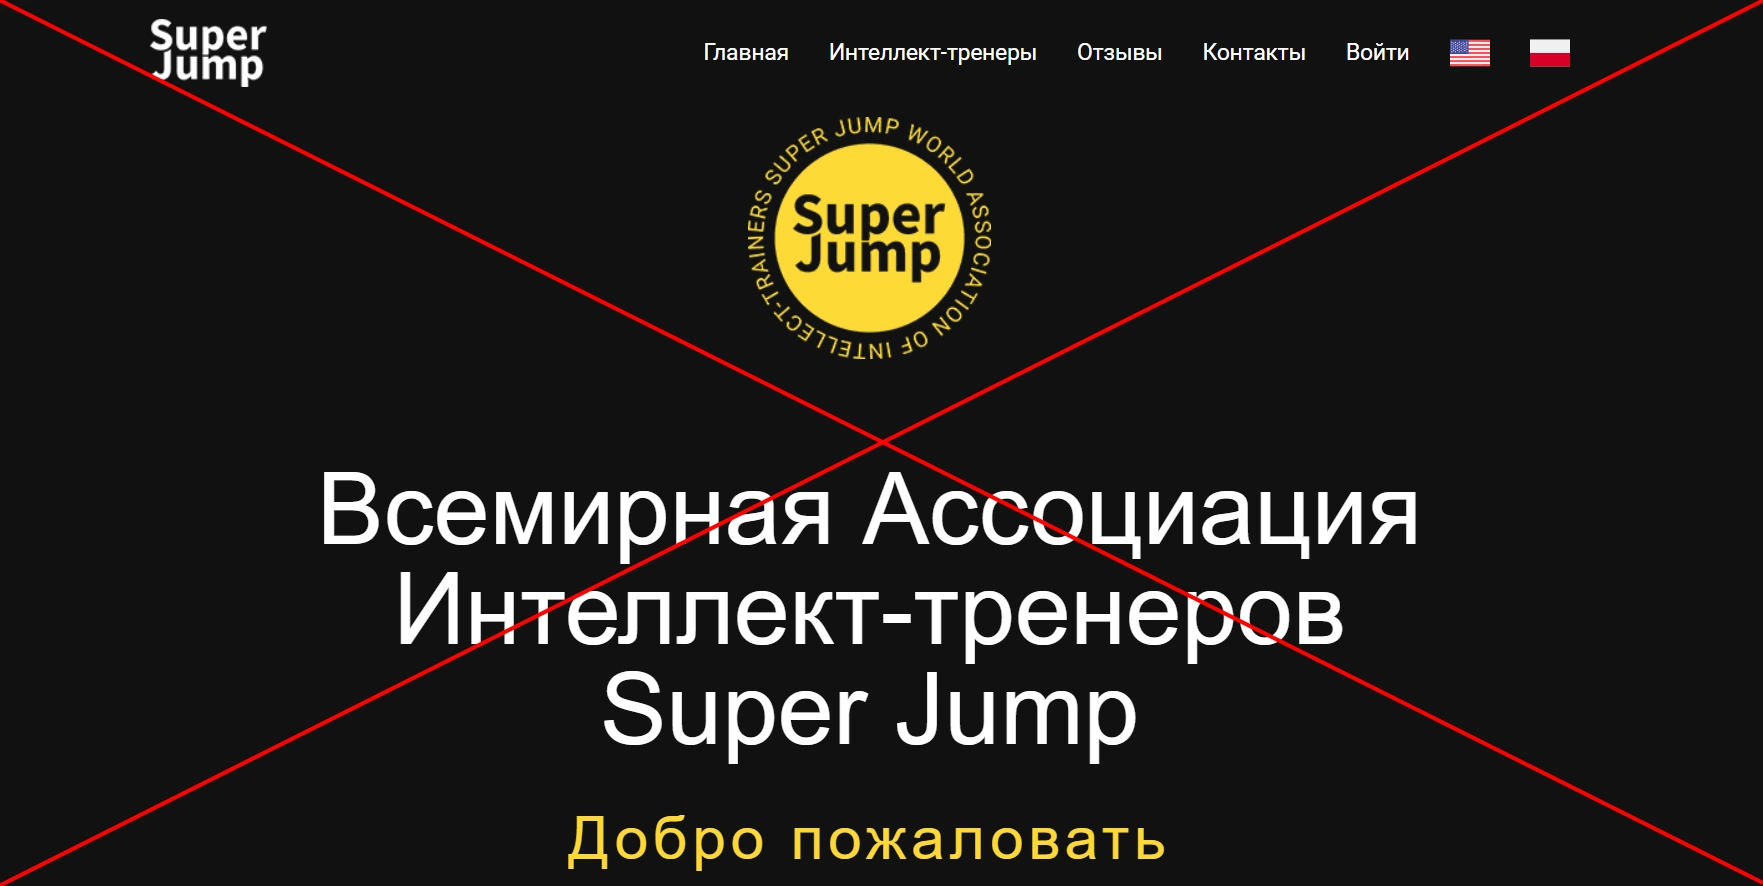 Super Jump - отзывы и обзор superjump.world. Интеллект-тренеры